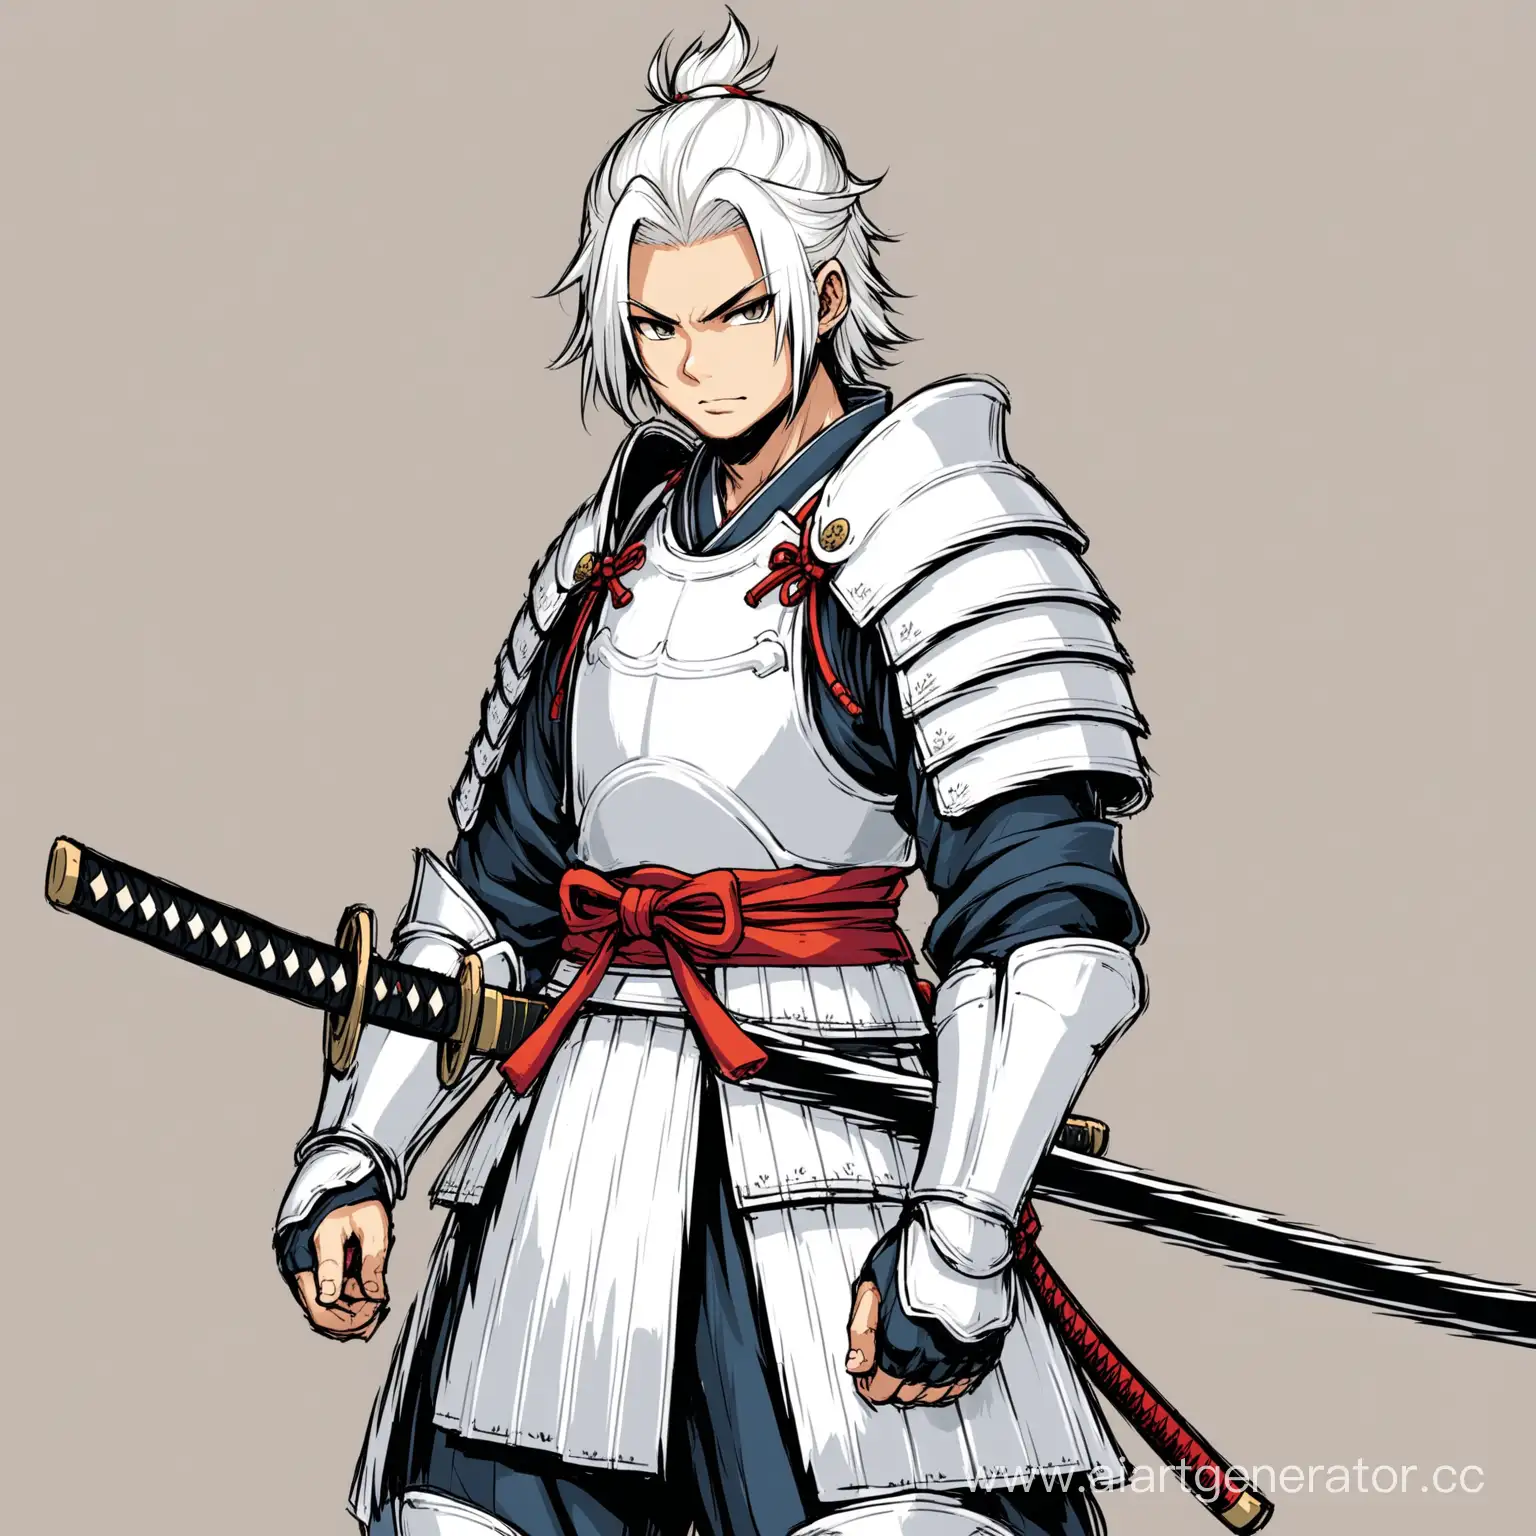 White-Armored-Samurai-Boy-with-Katana-Heroic-Warrior-Portrait-in-Traditional-Gear